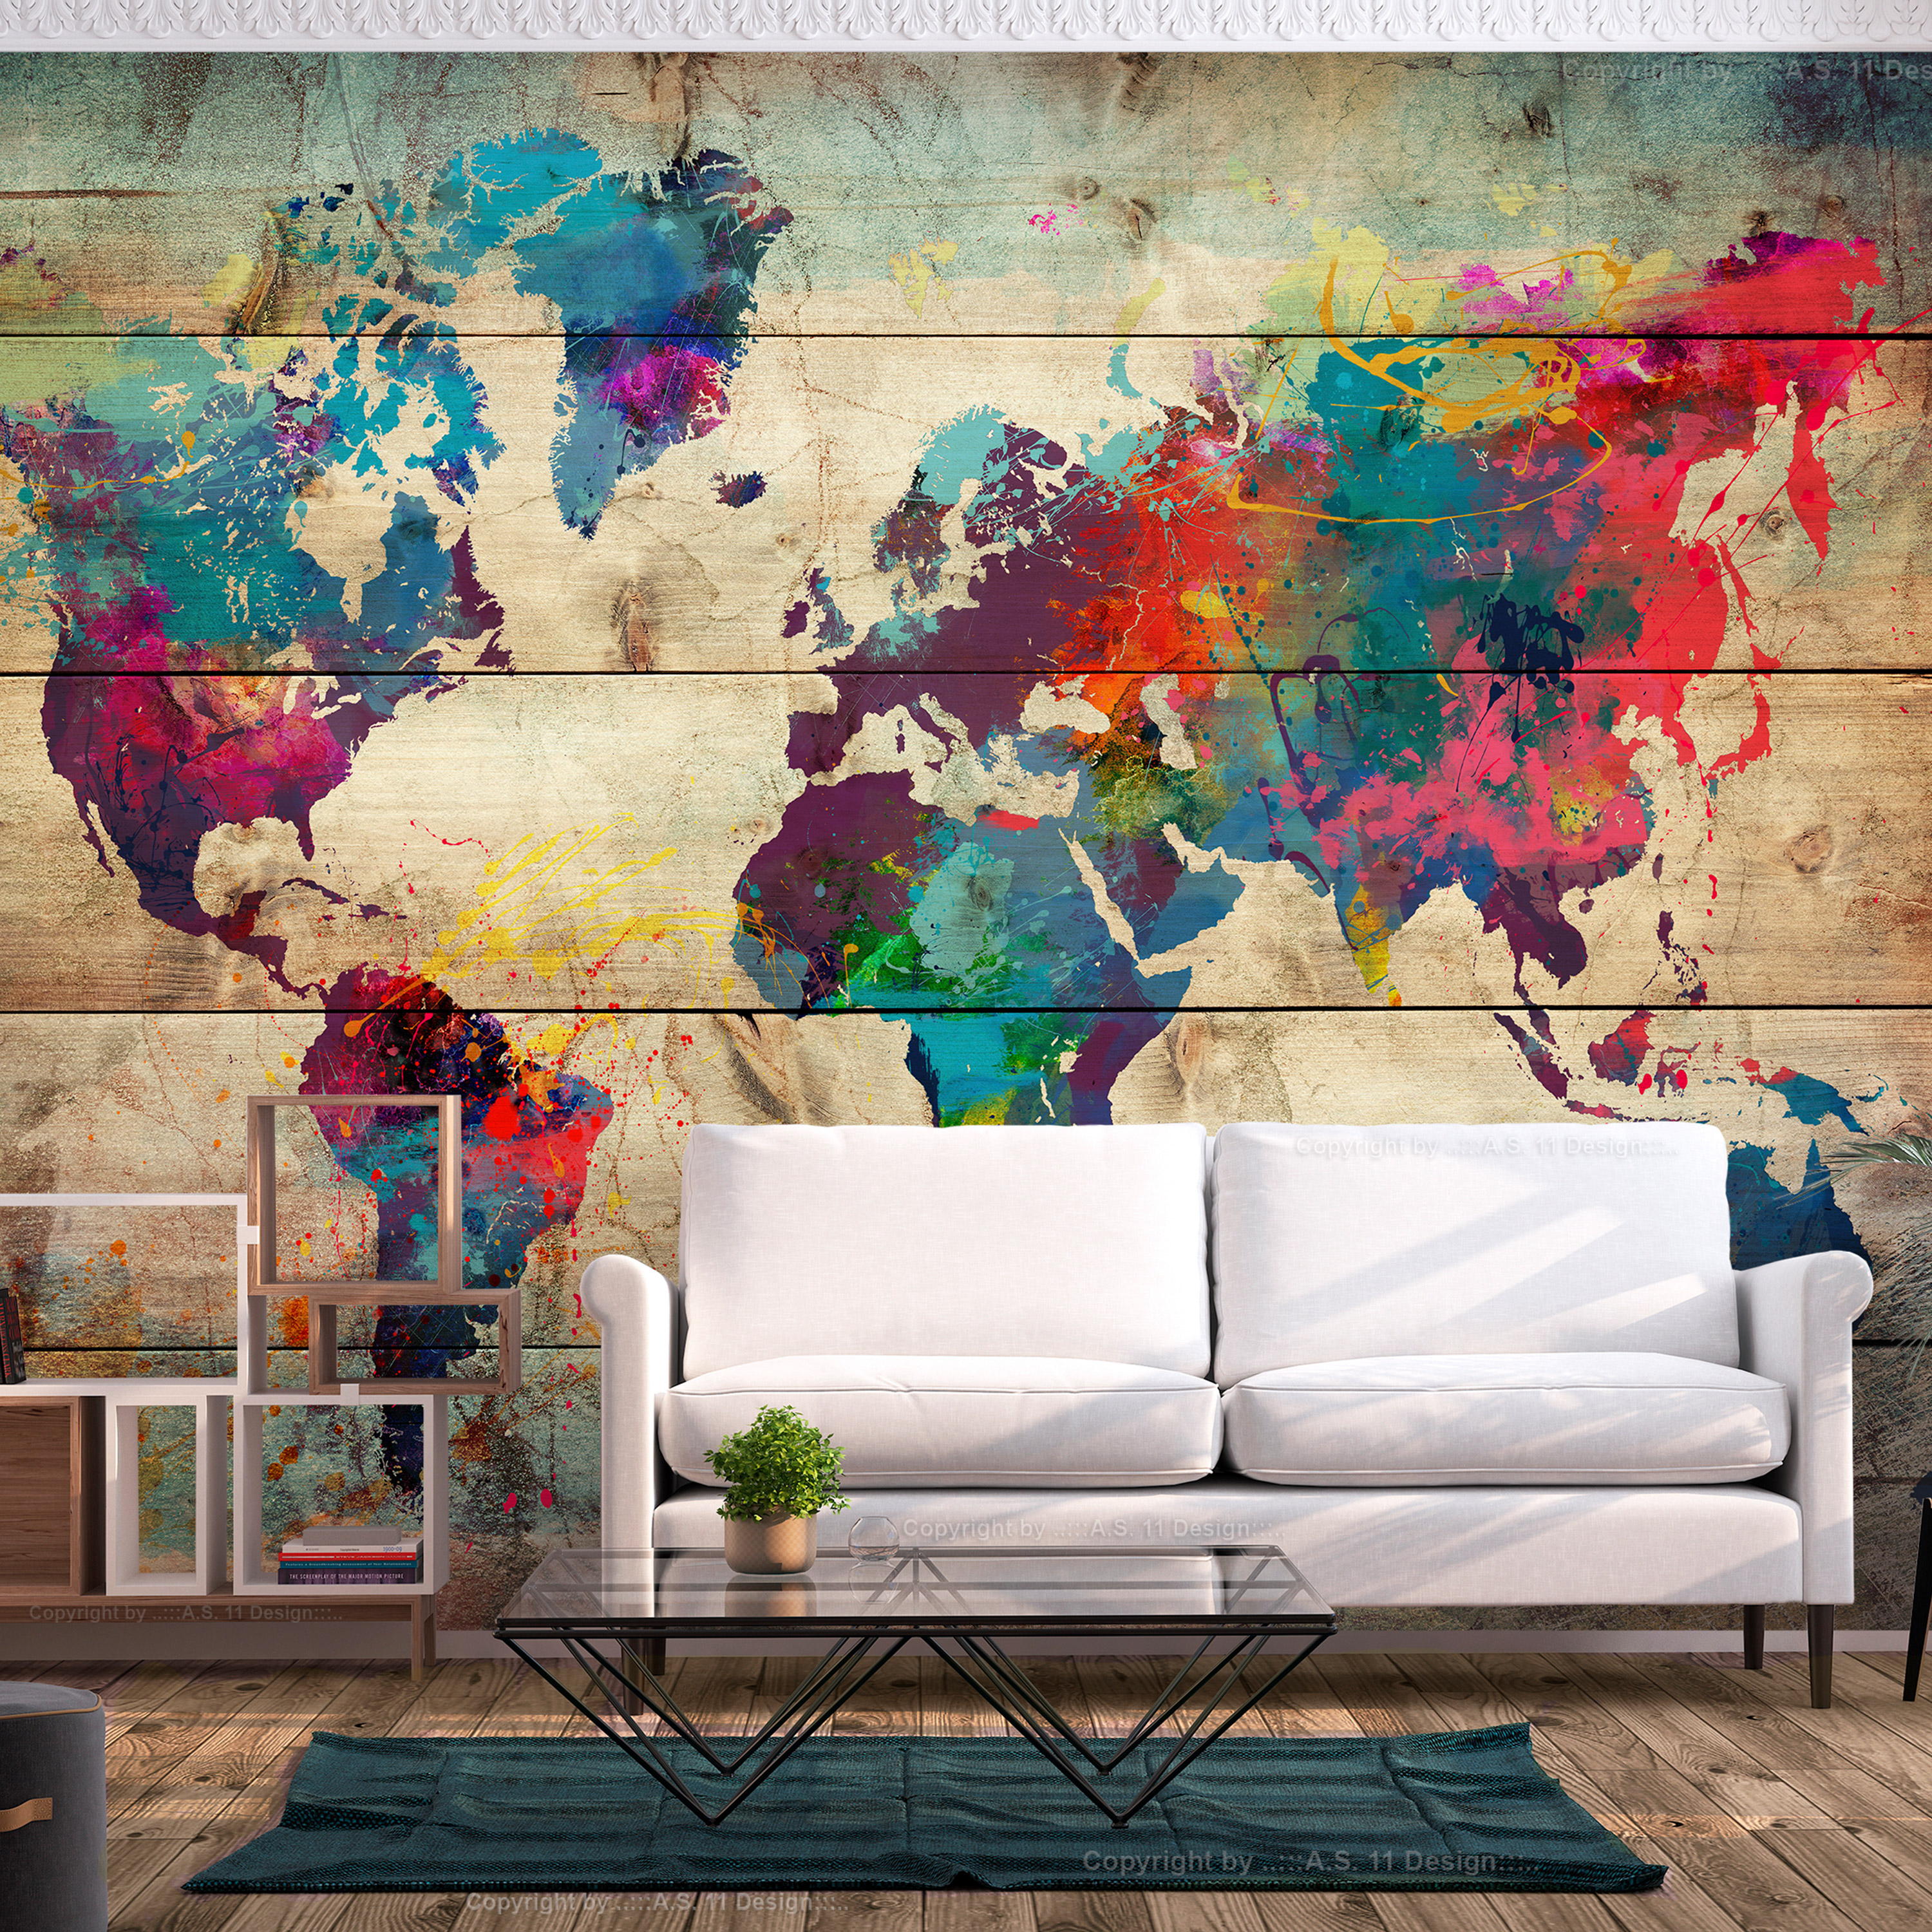 Self-adhesive Wallpaper - Multicolored Nature - 392x280